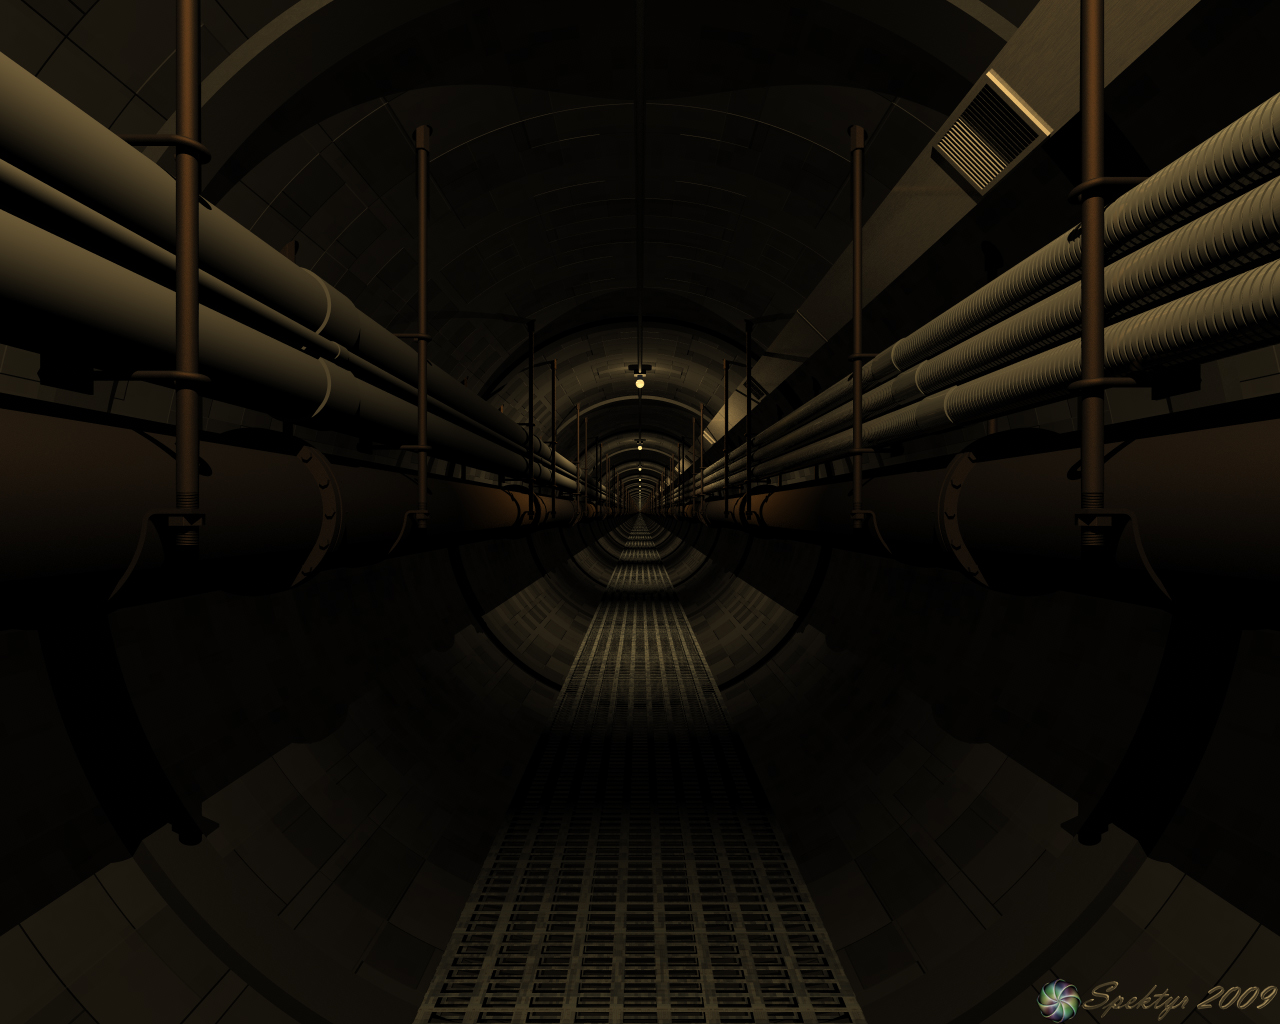 Dark Tunnel with Soft Shadows